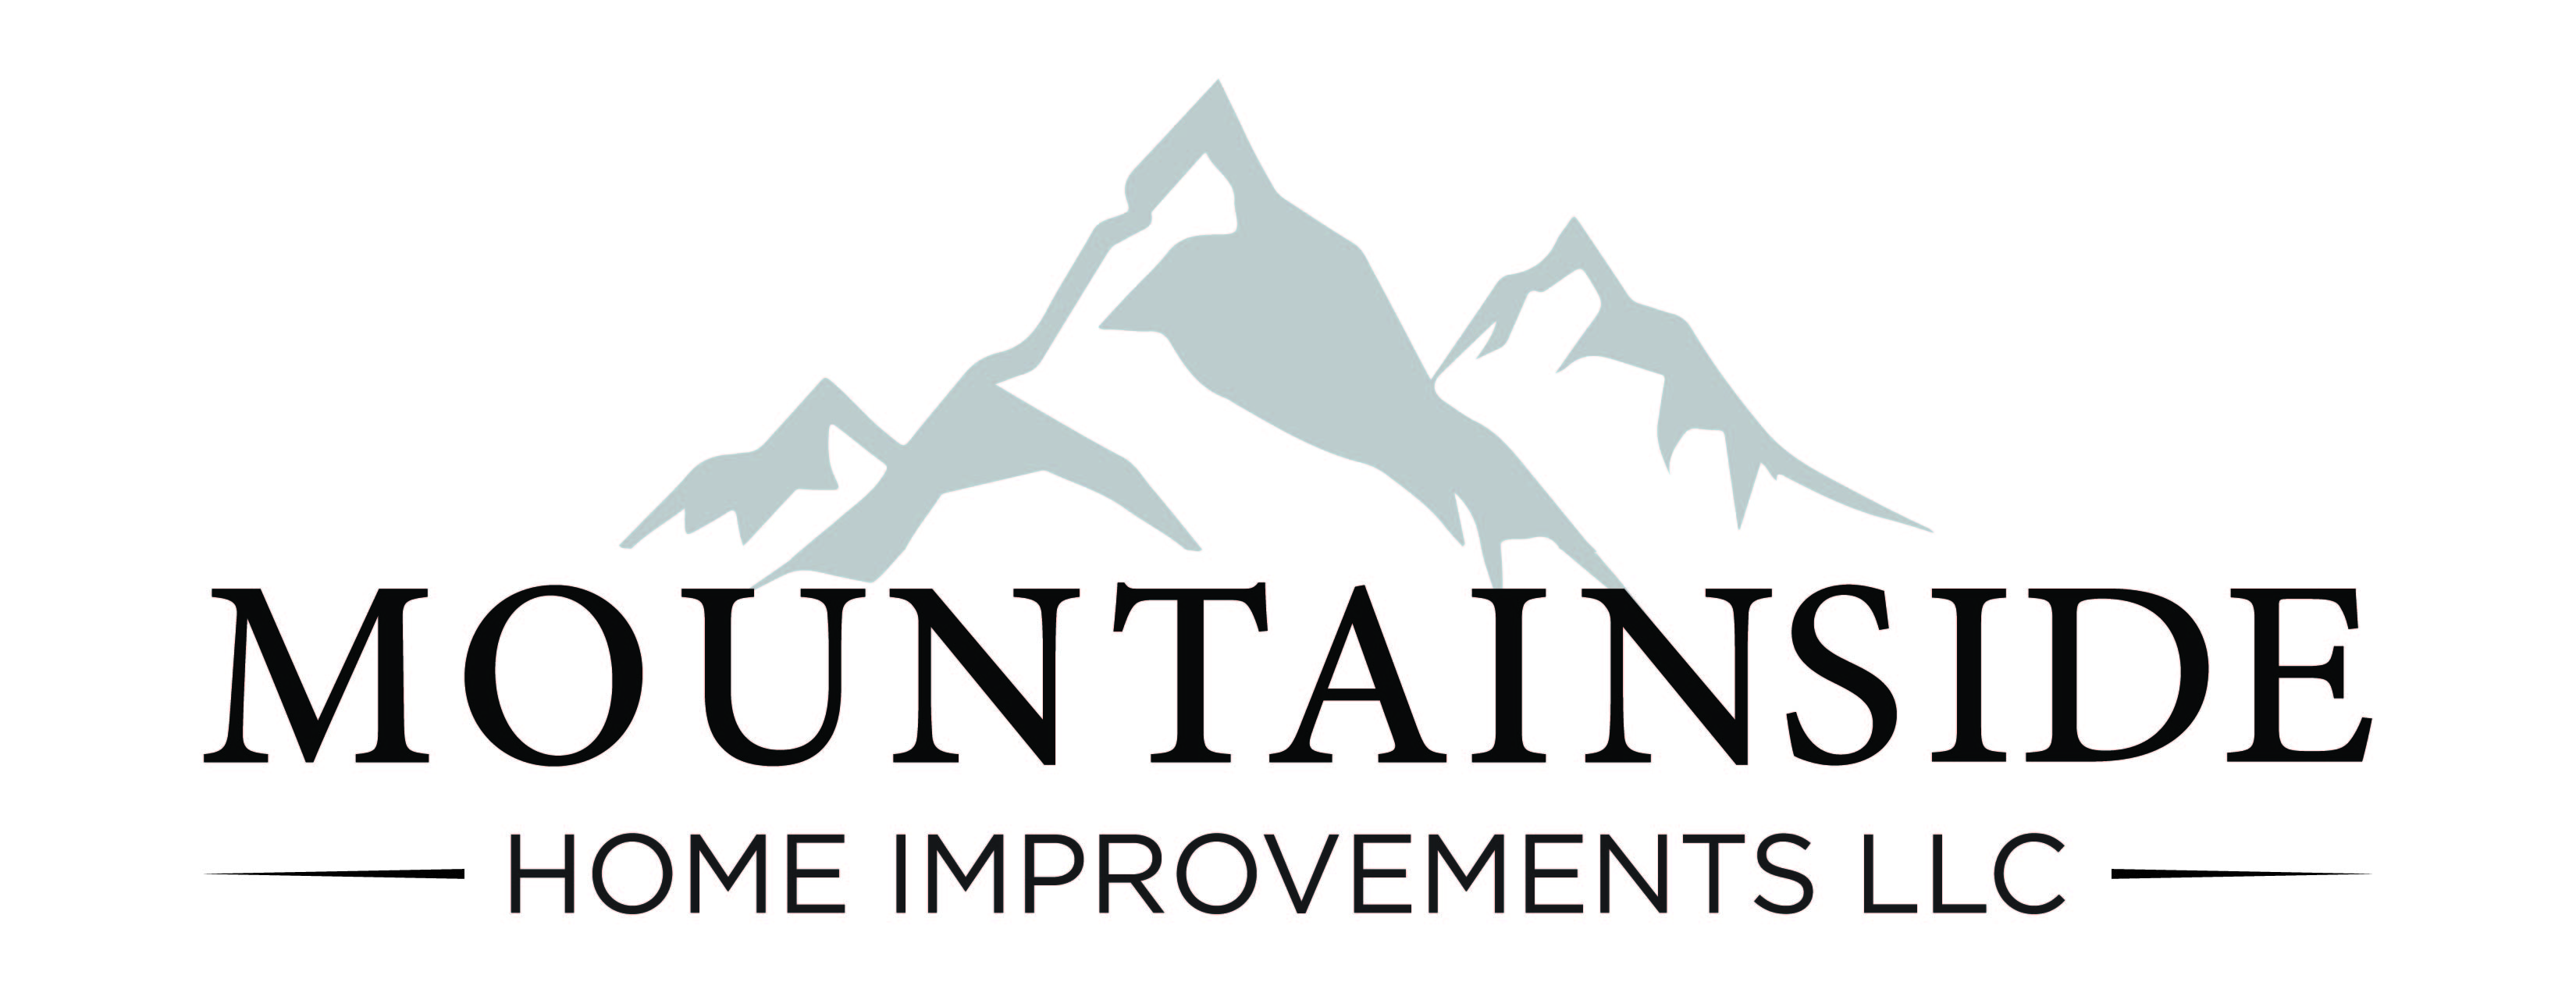 Mountainside Home Improvements, LLC Logo